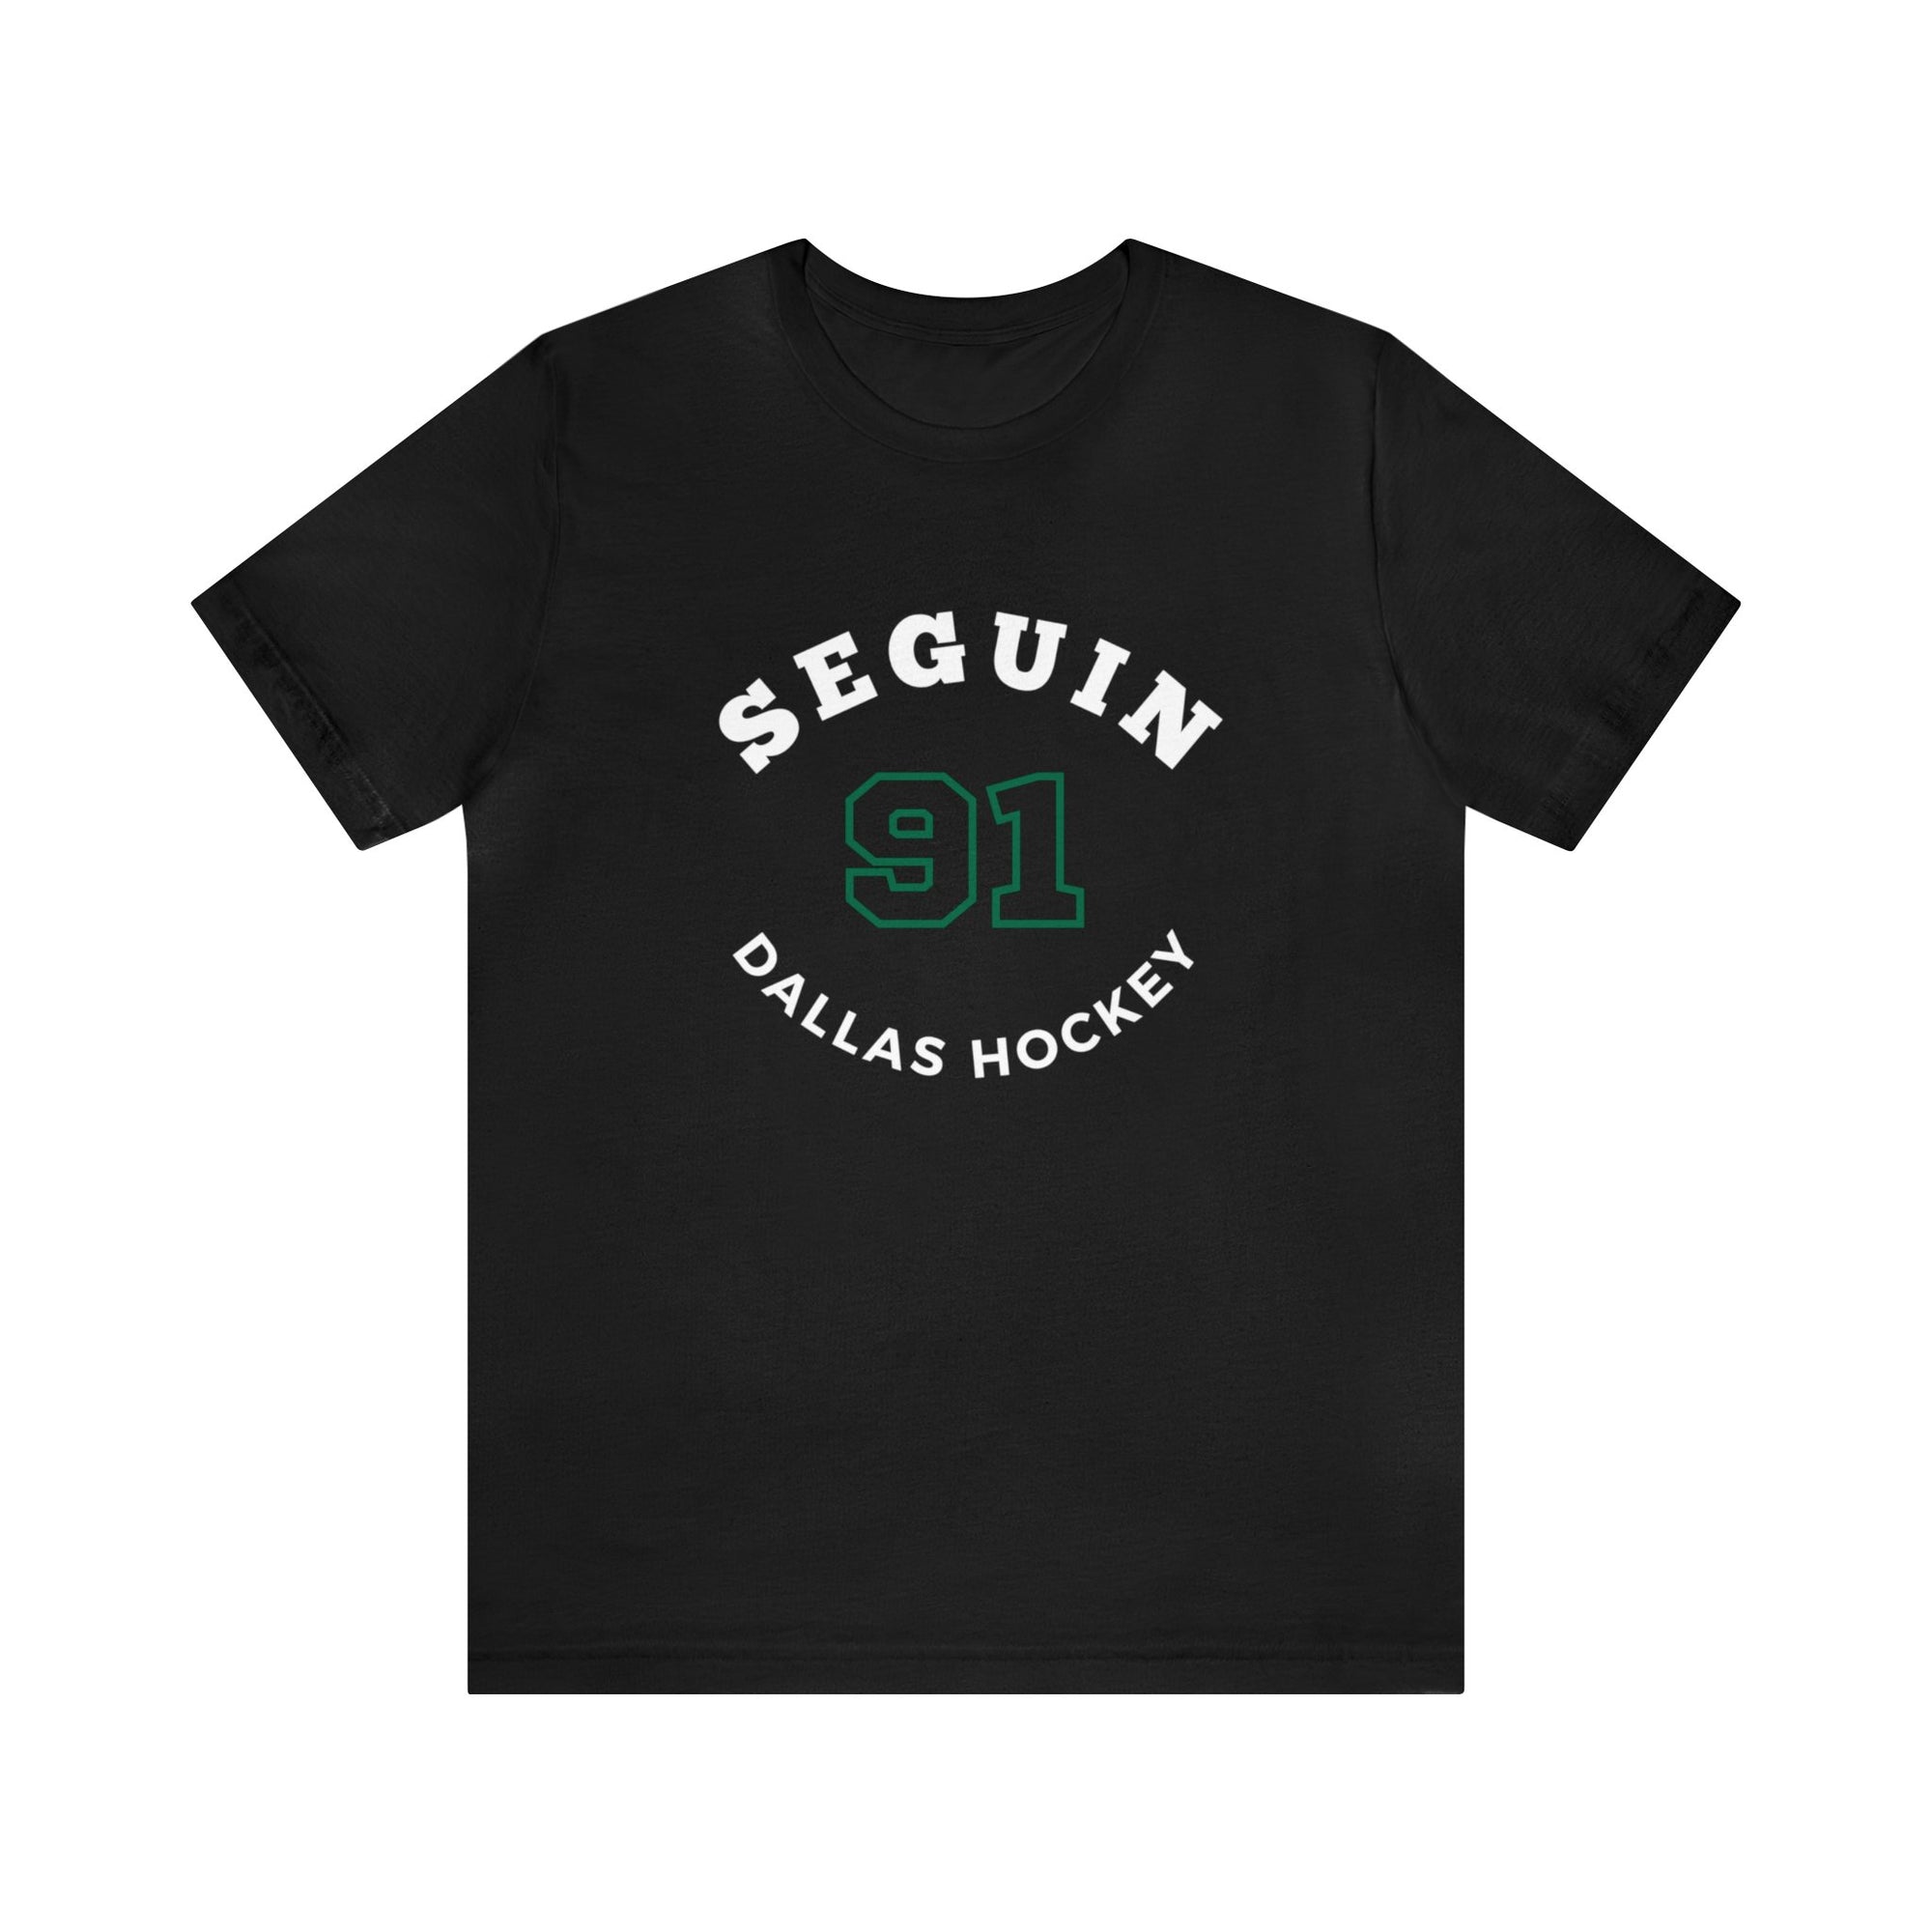 Seguin 91 Dallas Hockey Number Arch Design Unisex T-Shirt